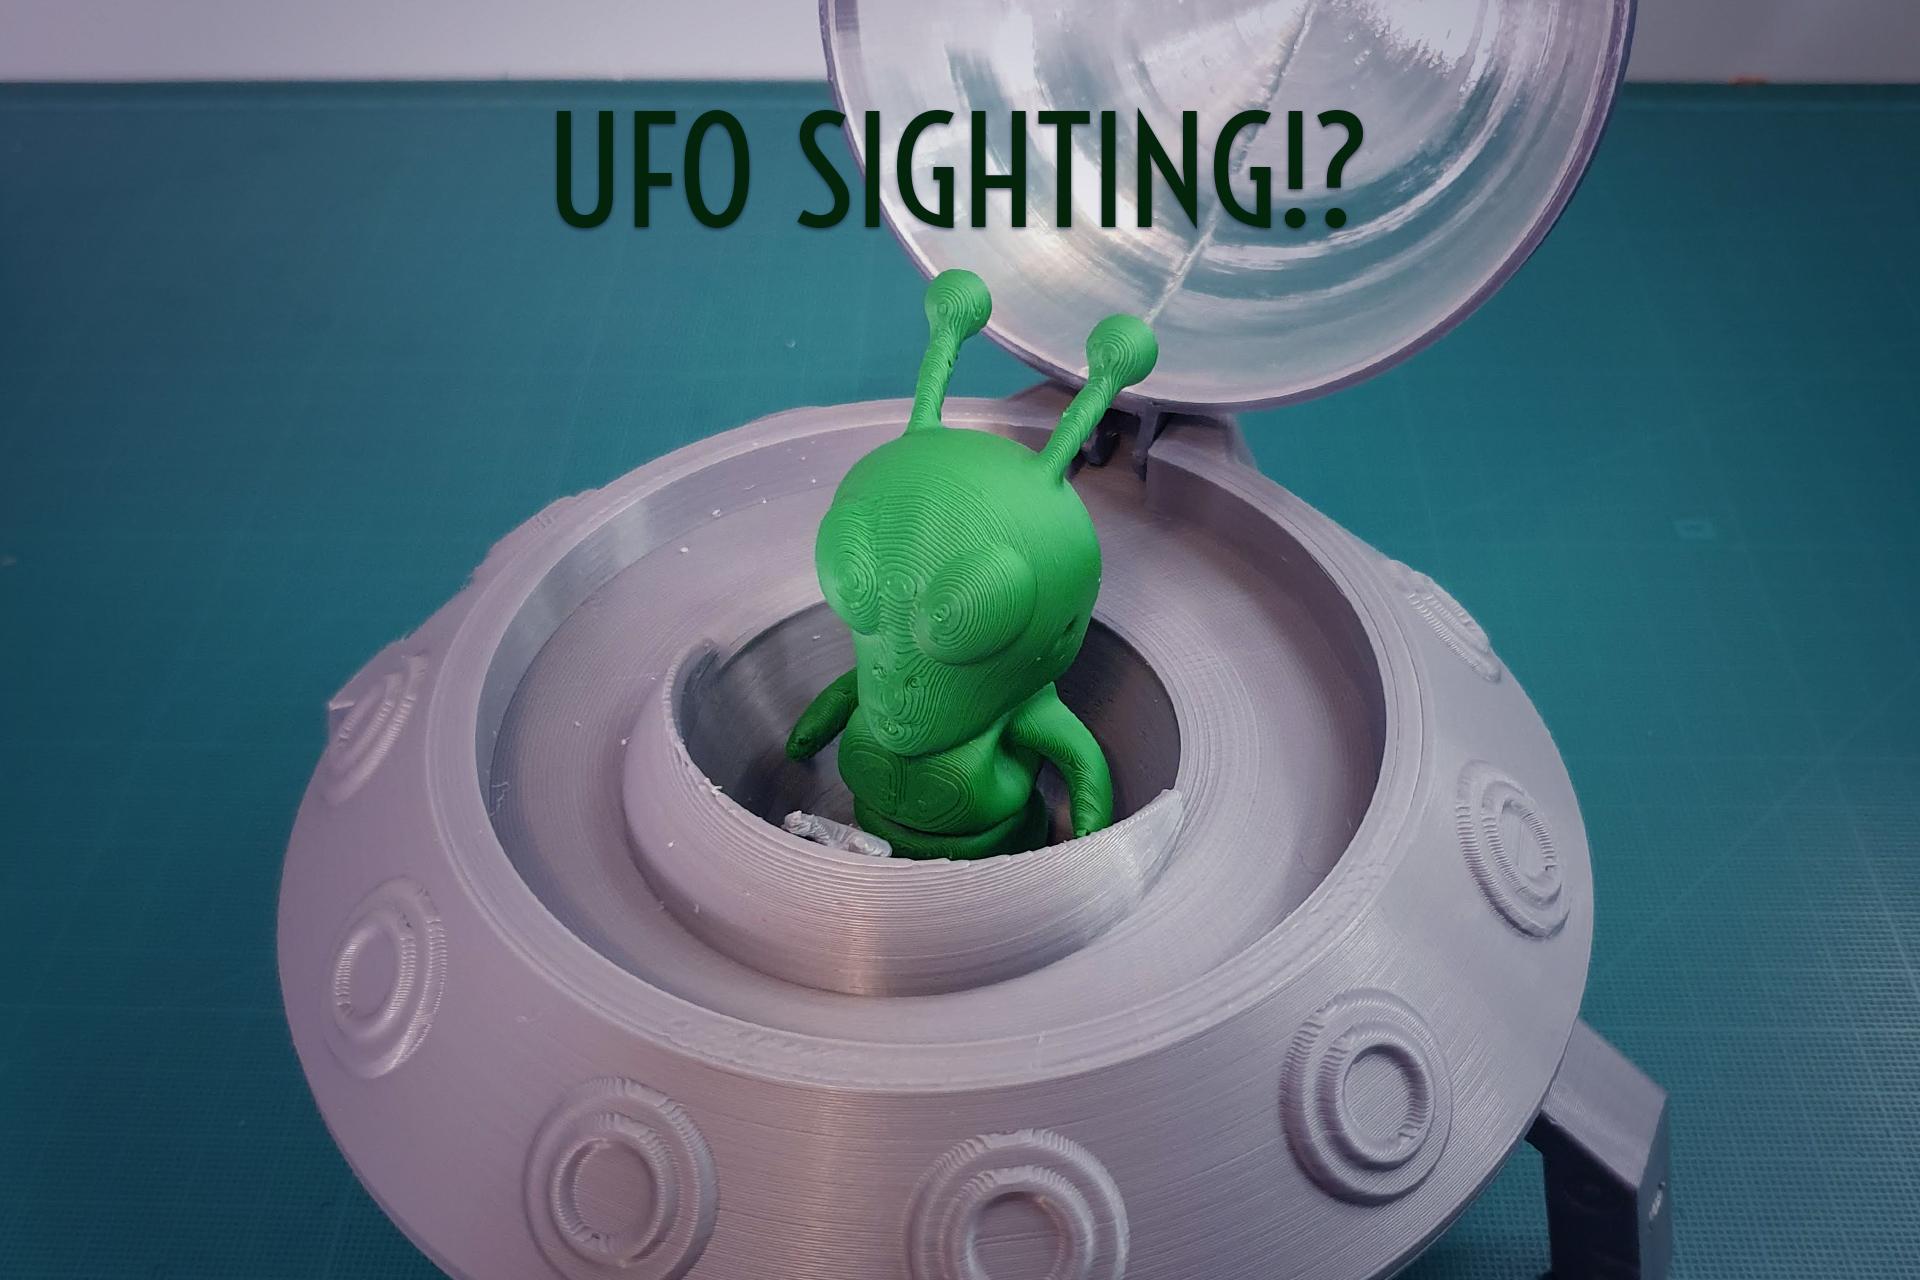 Post test post + UFOs!